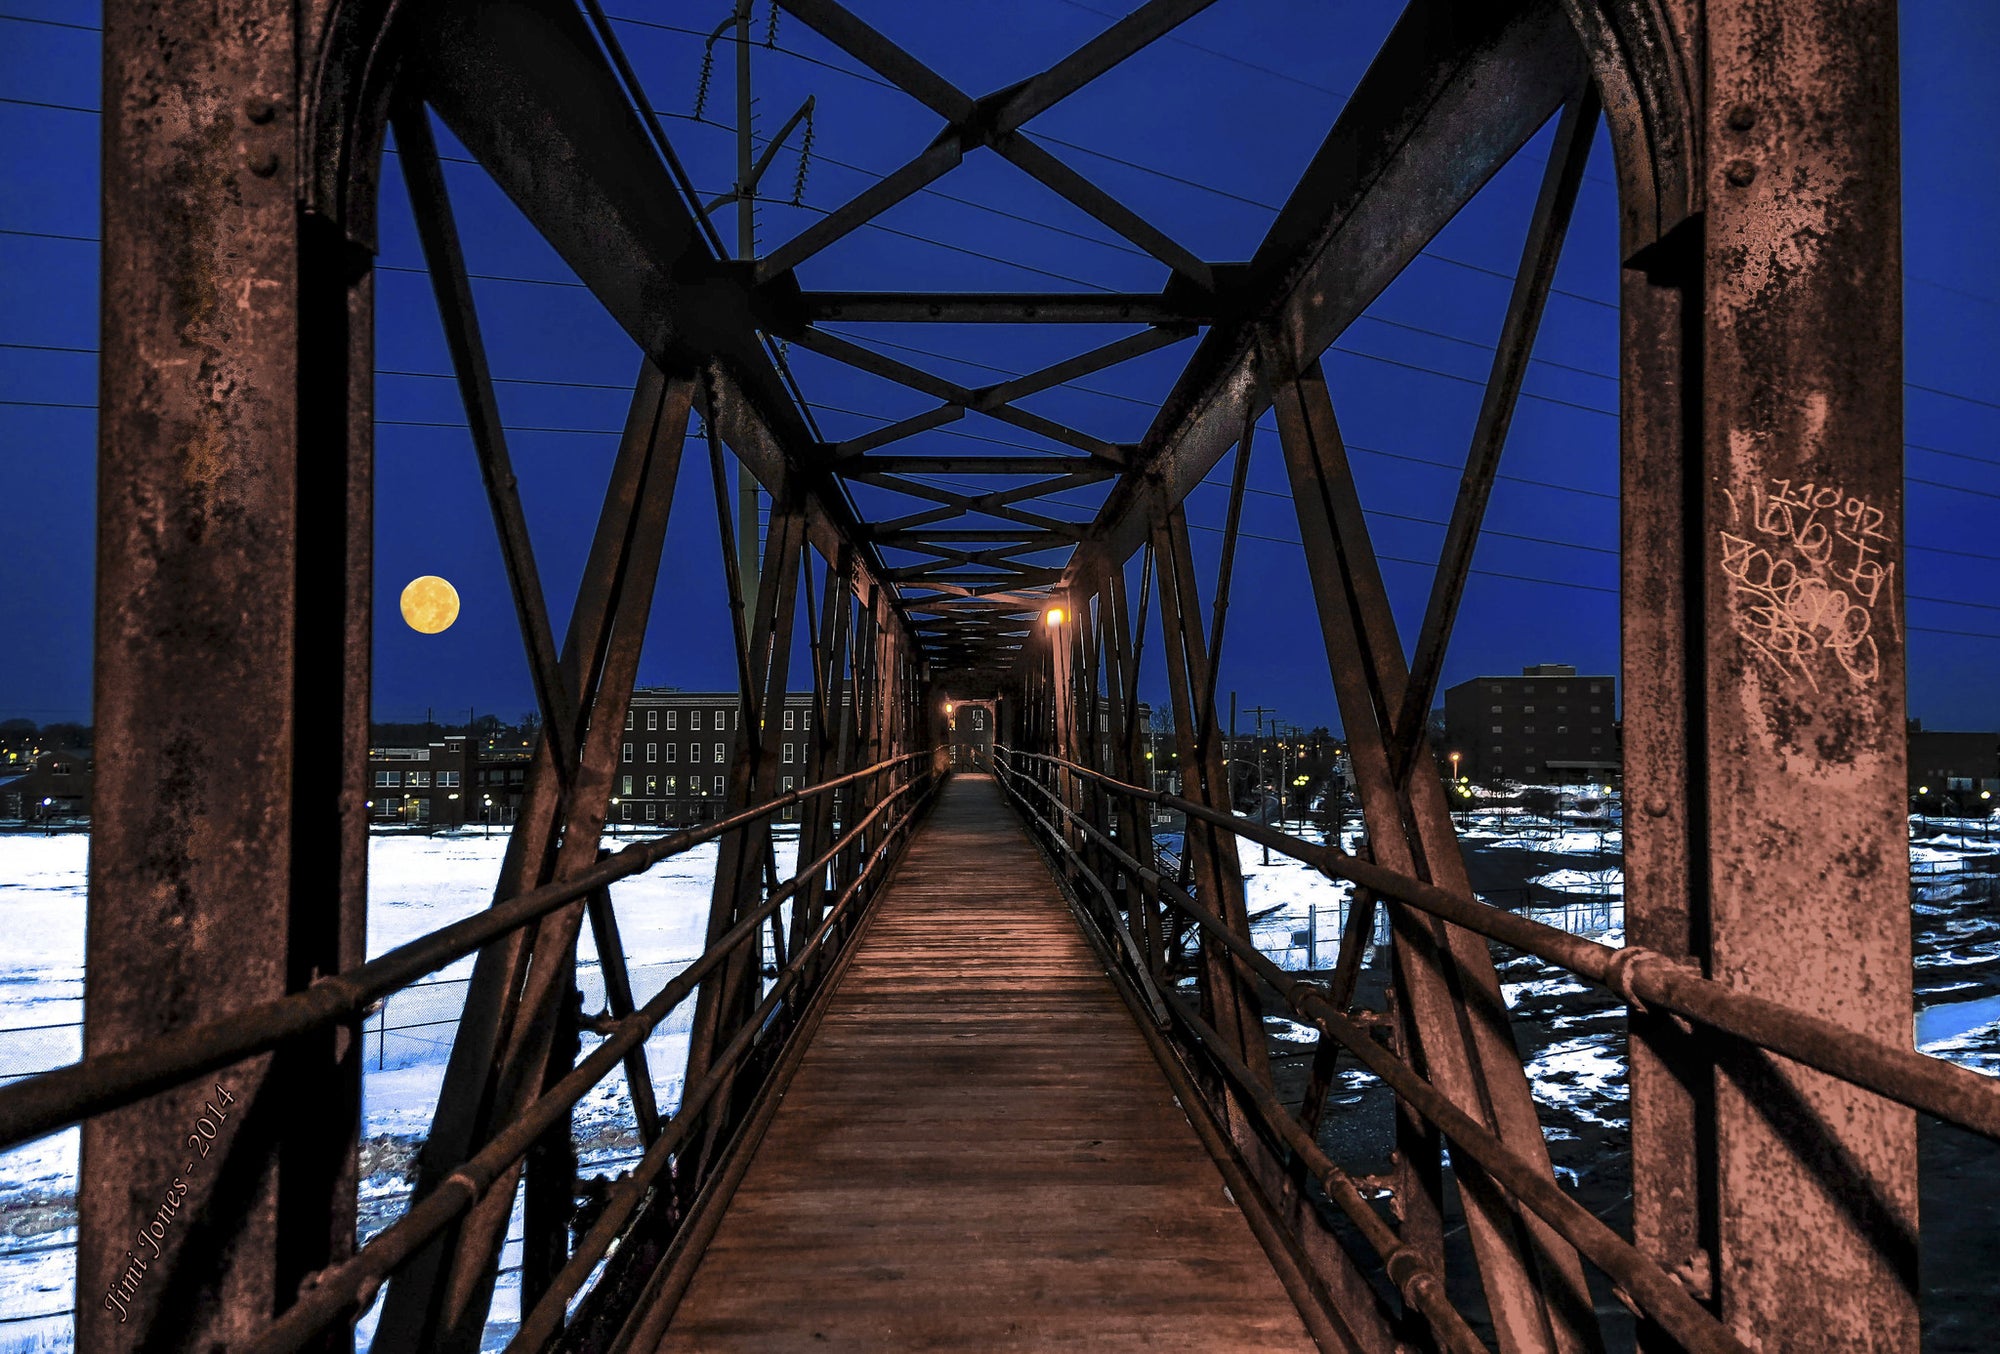 A full moon shine over a pedestrian bridge.